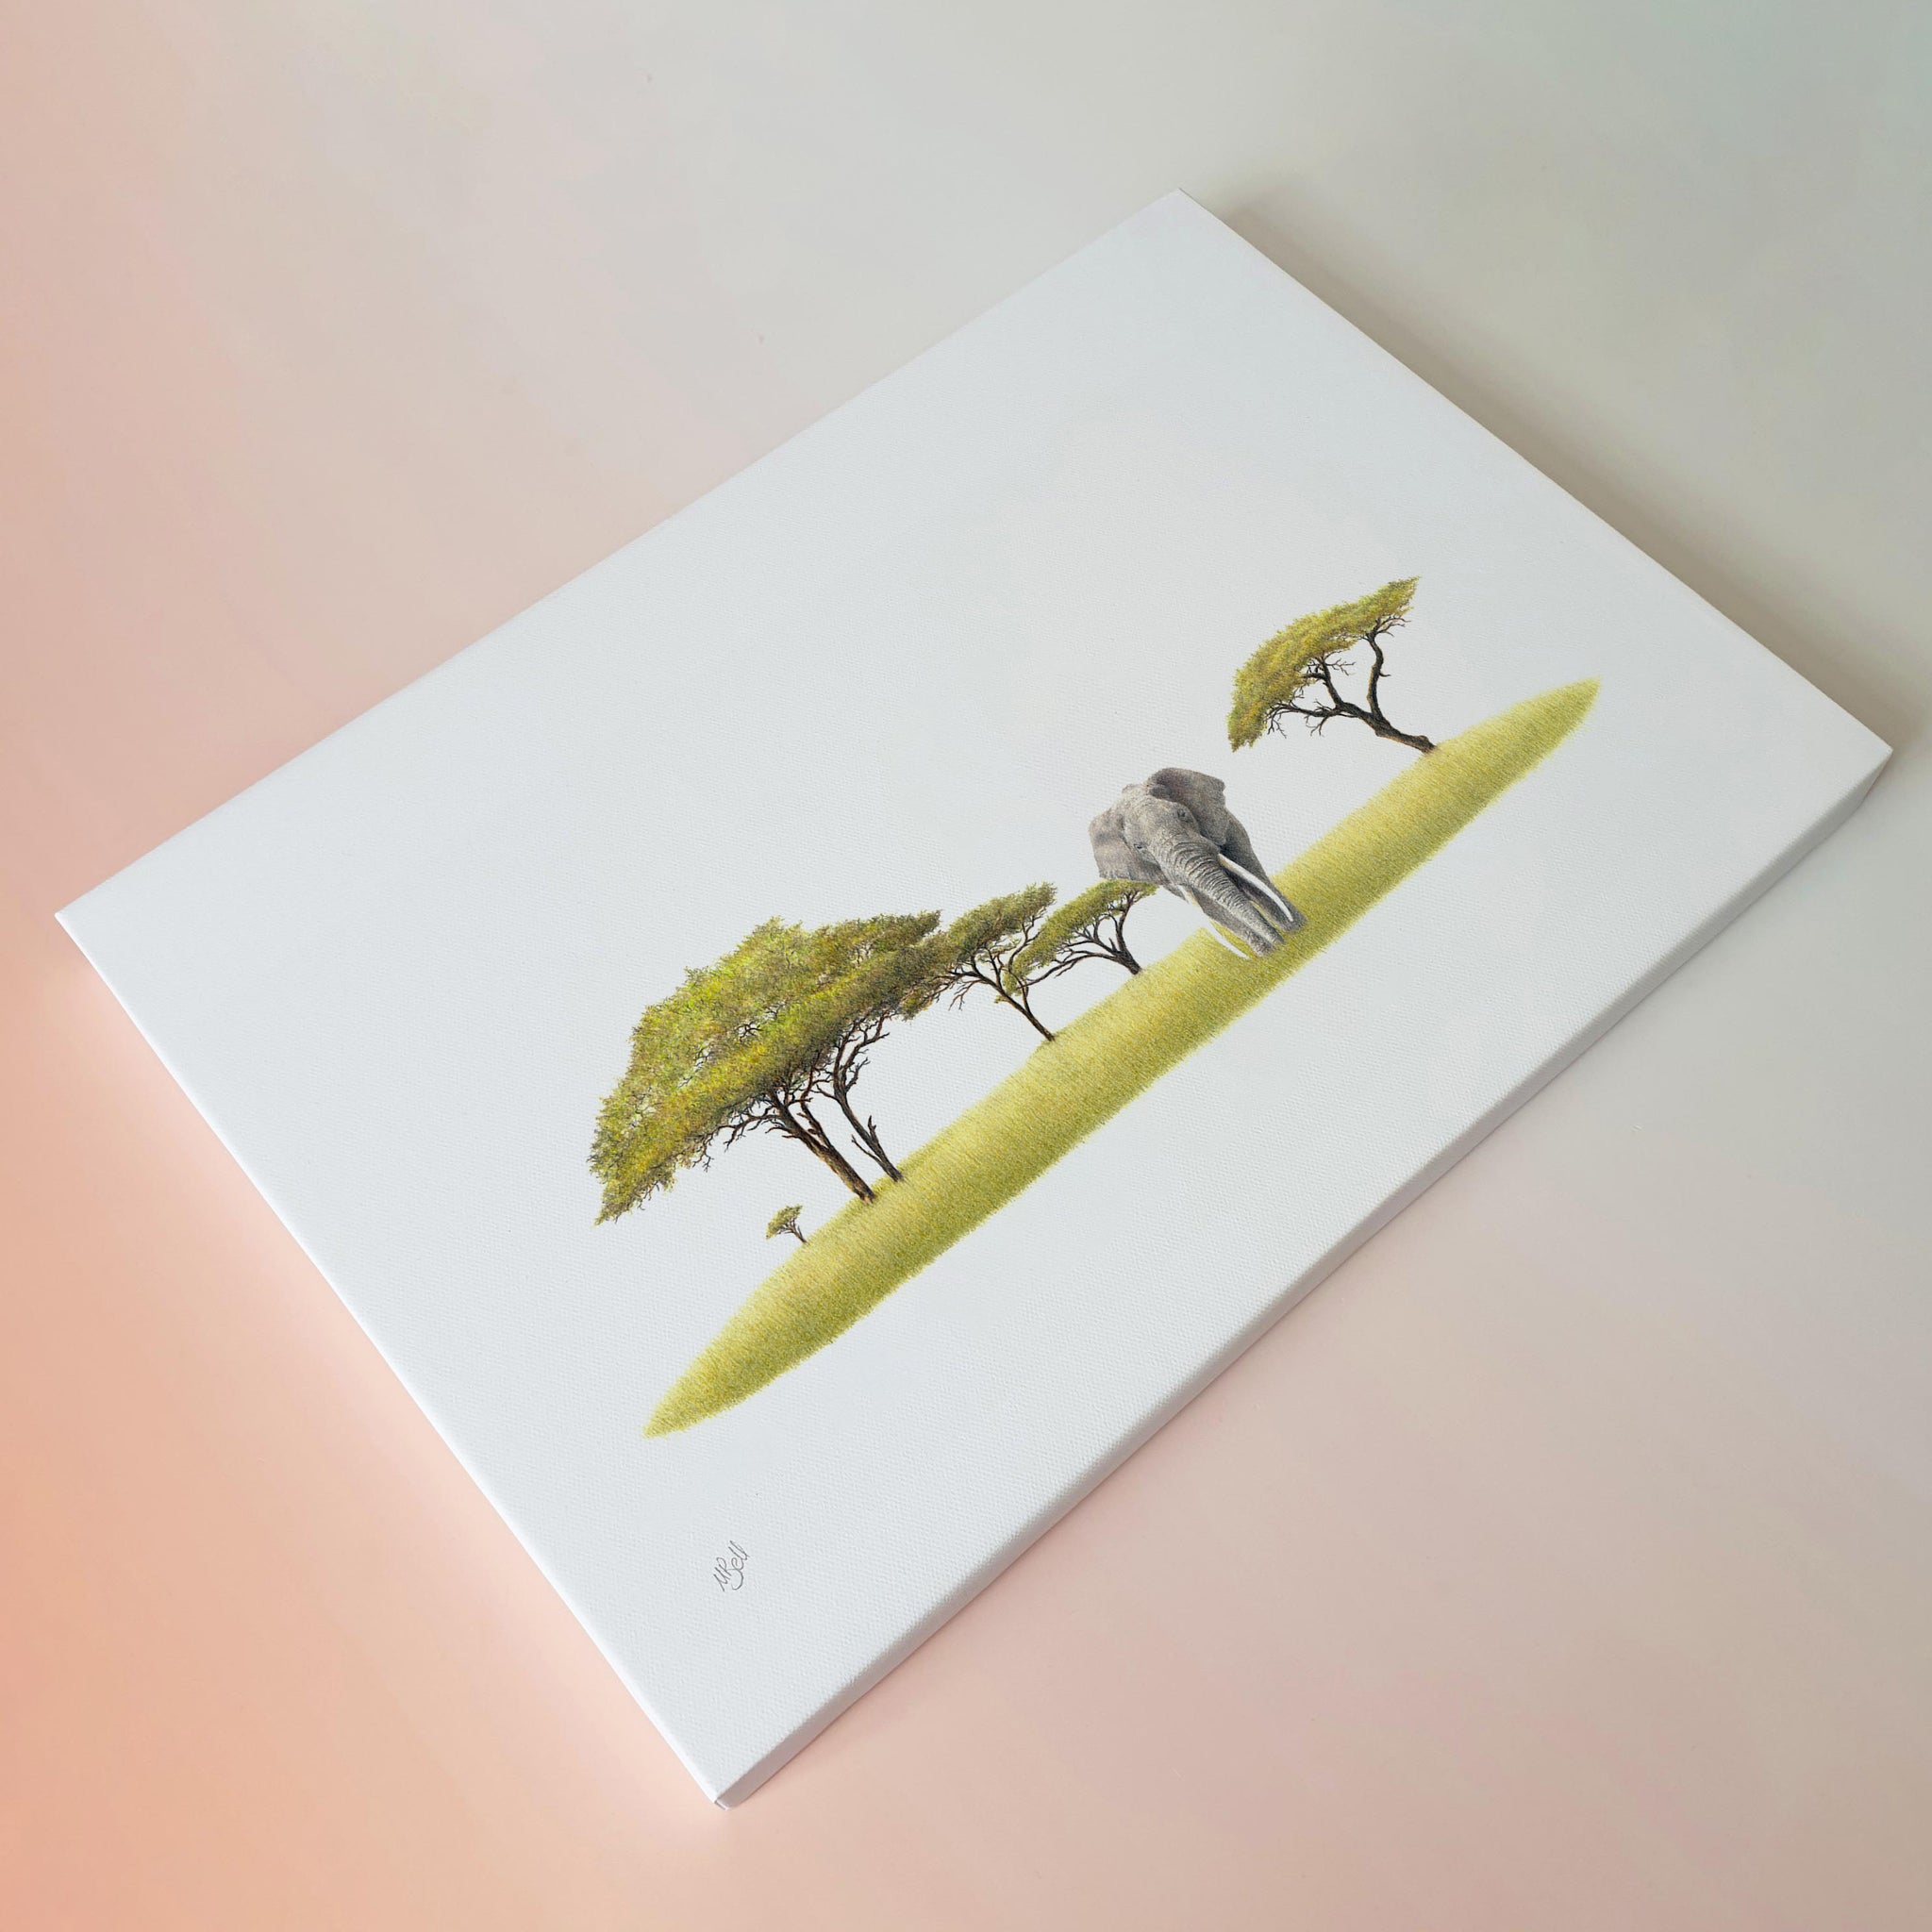 African Elephant and Acacia trees wildlife art print on canvas